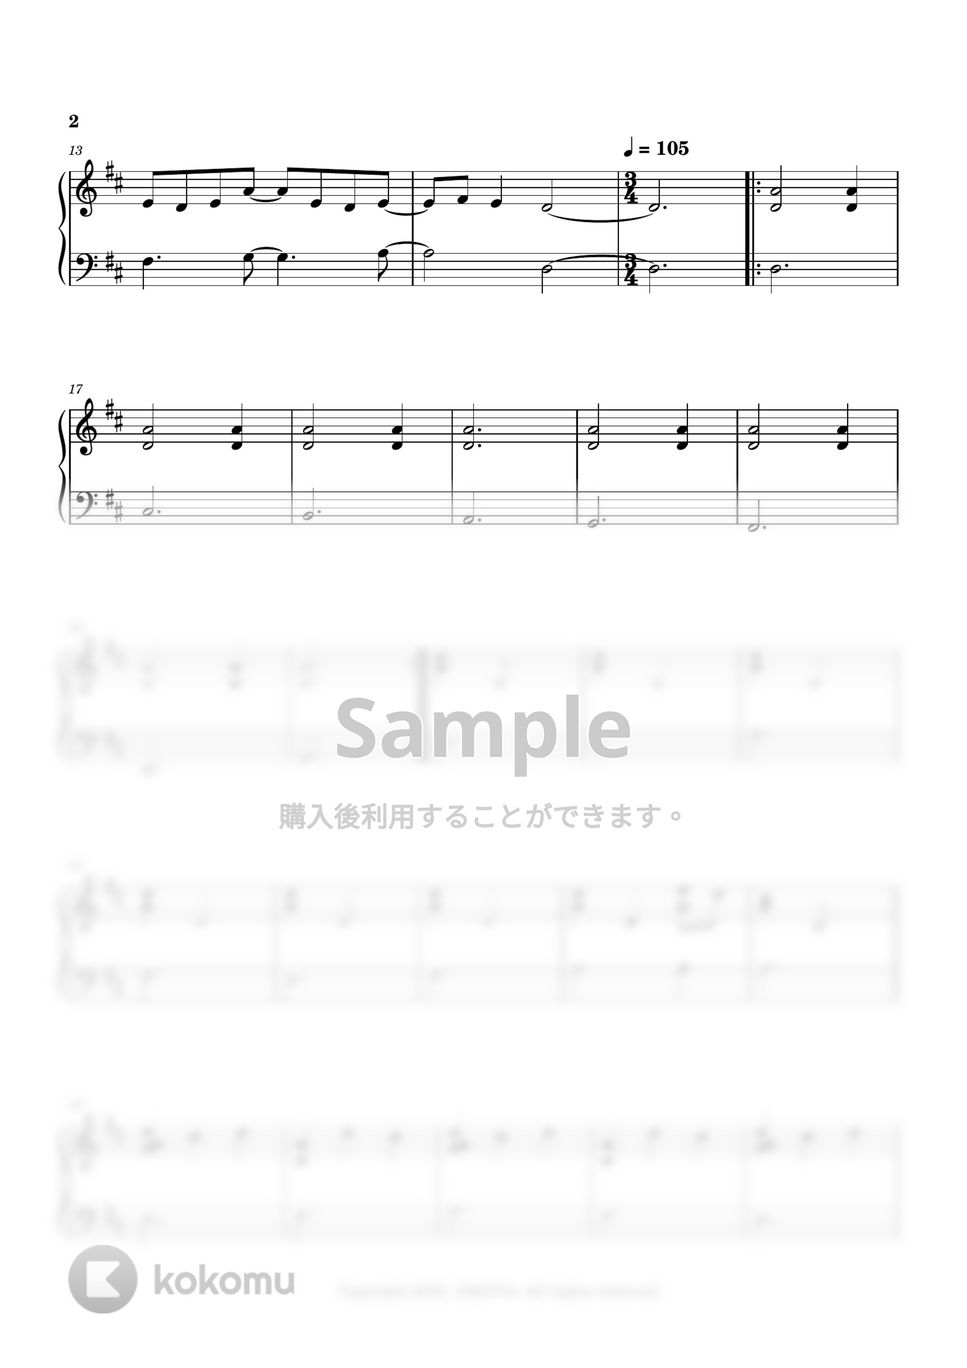 Seiji Kameda - 日記の中の恋人たち (今夜、世界からこの恋が消えても track 27) by 今日ピアノ(Oneul Piano)